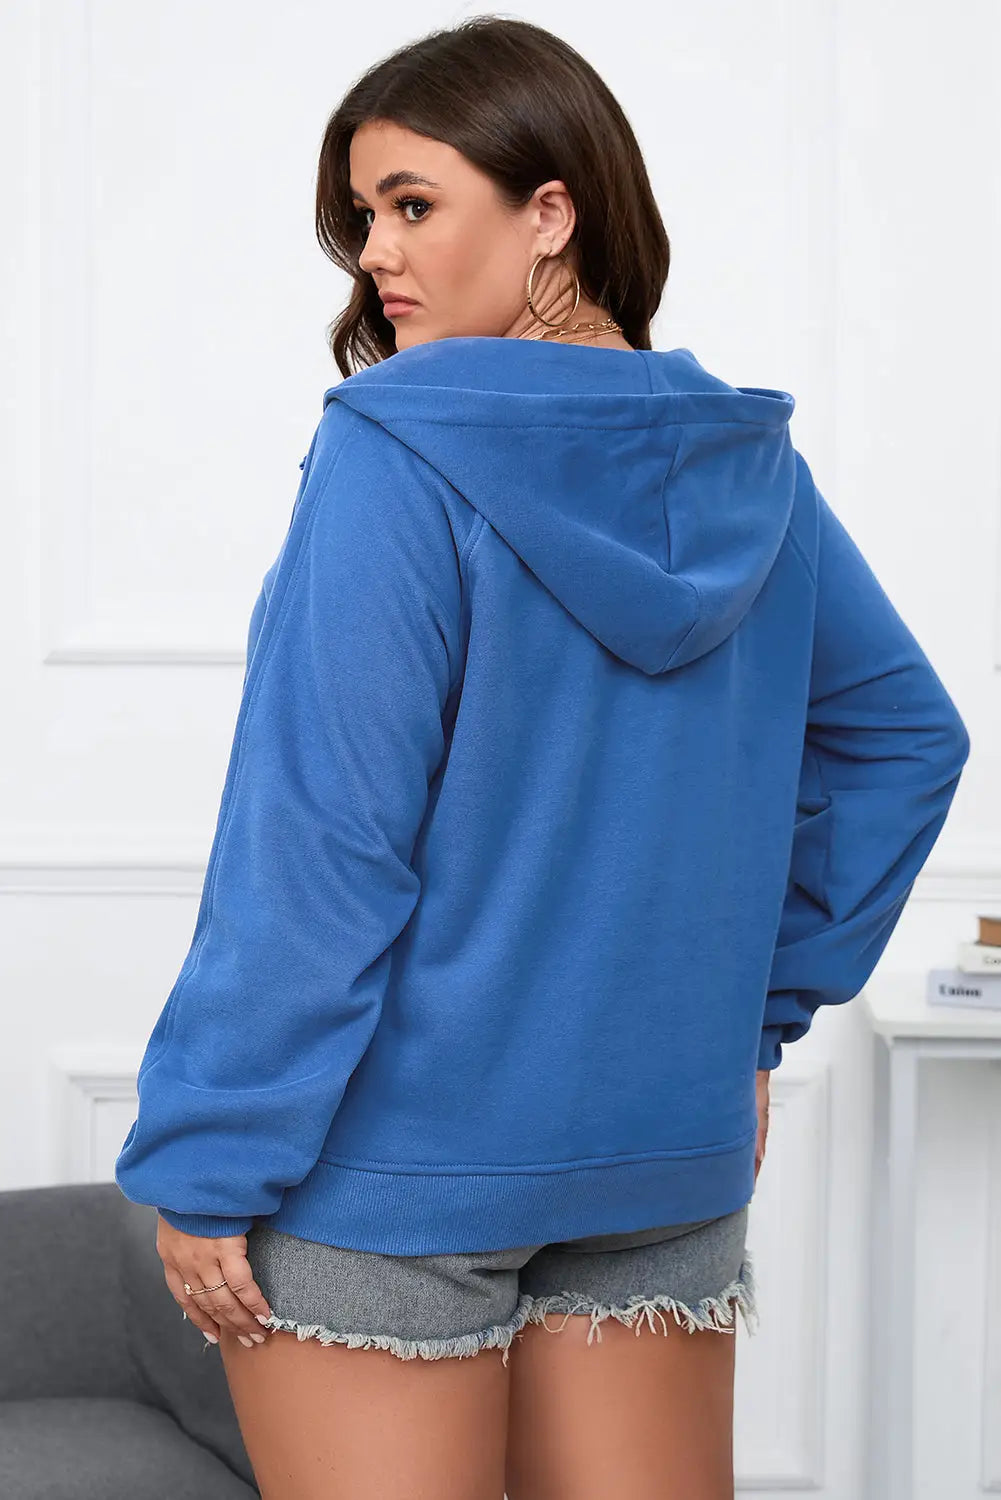 Bluing plus size mineral wash zip up hoodie